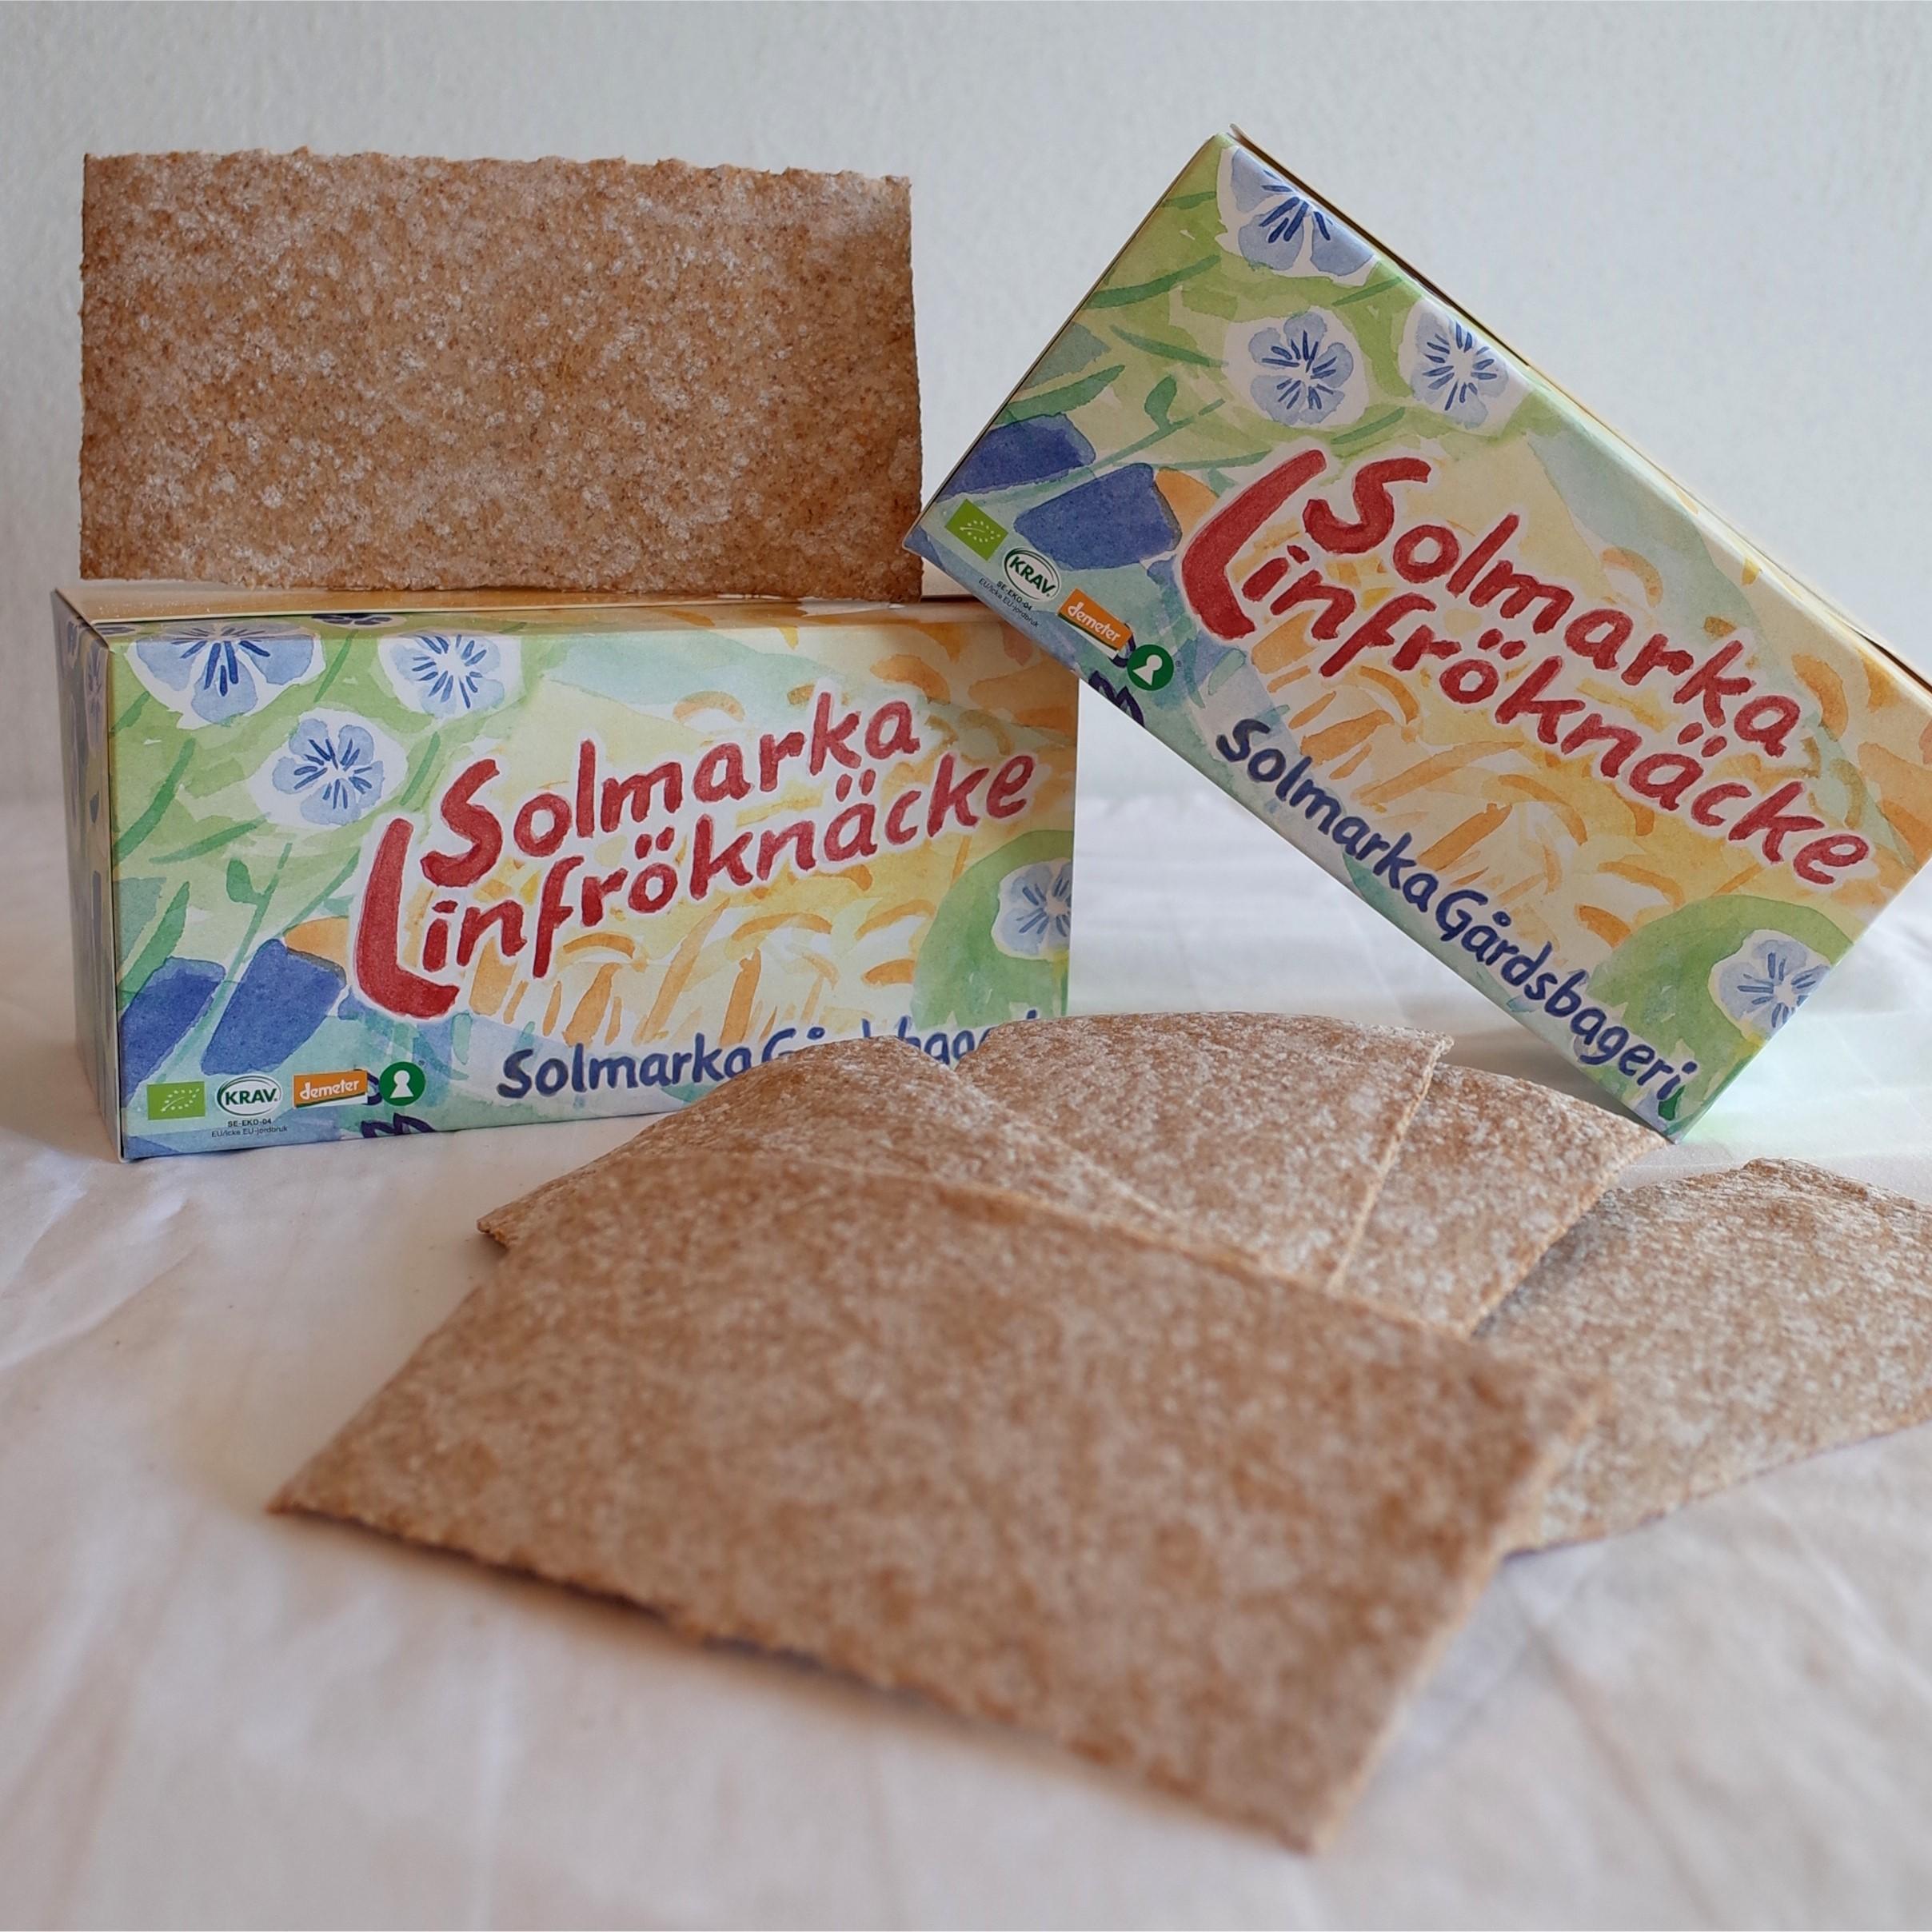 Solmarka Gårdsbageri's Flax Cracker Bread'